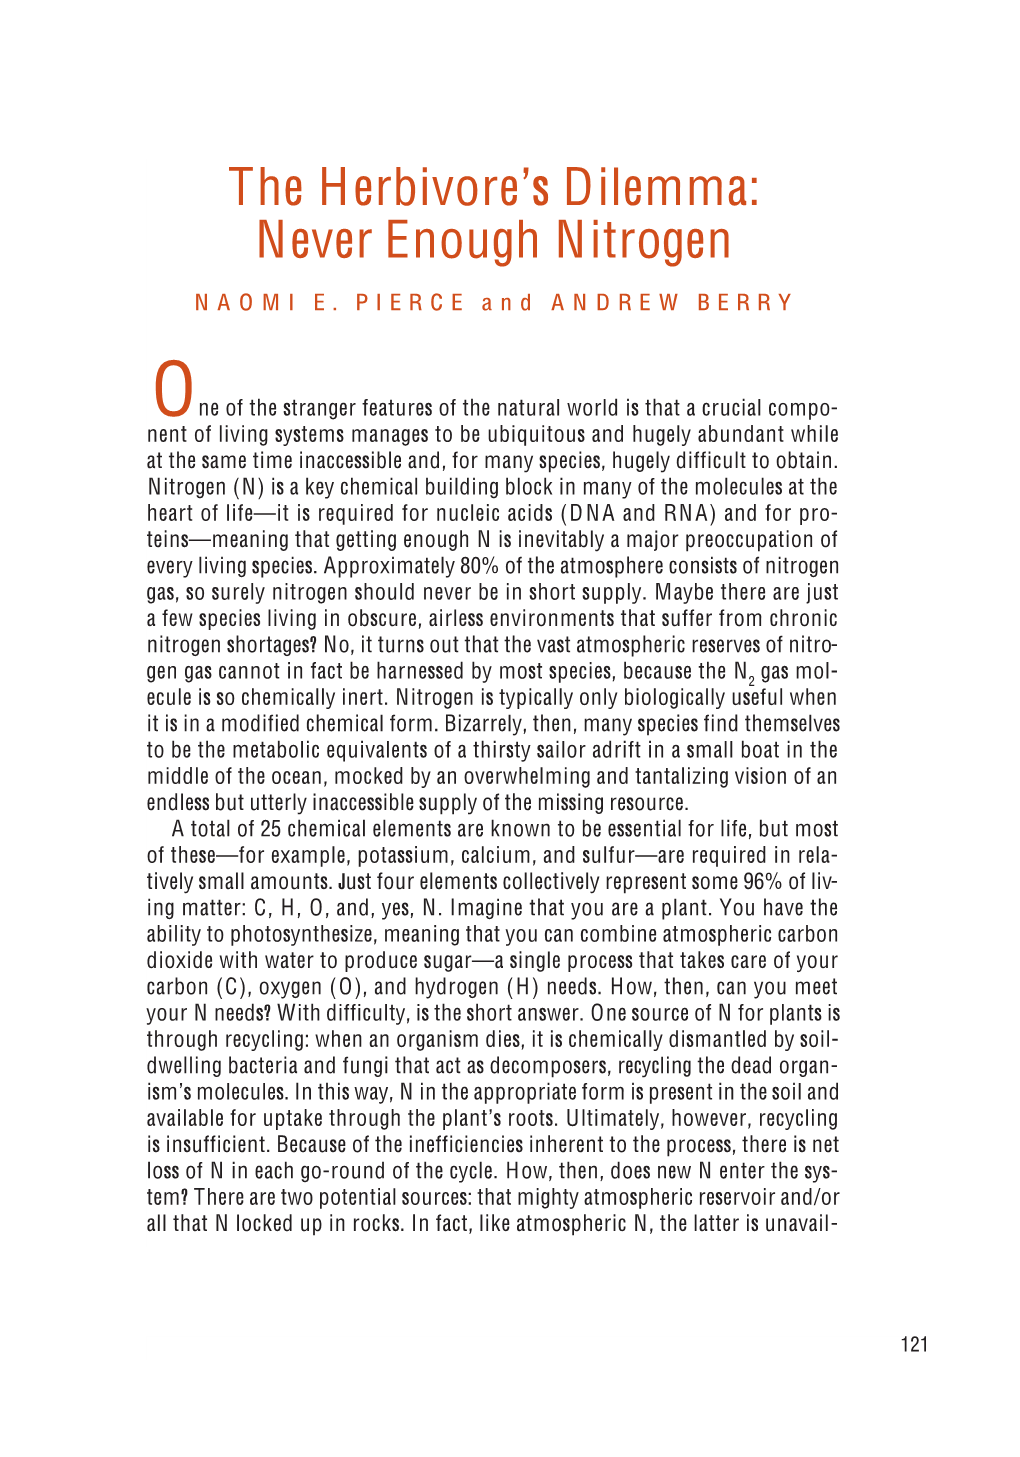 The Herbivore's Dilemma: Never Enough Nitrogen